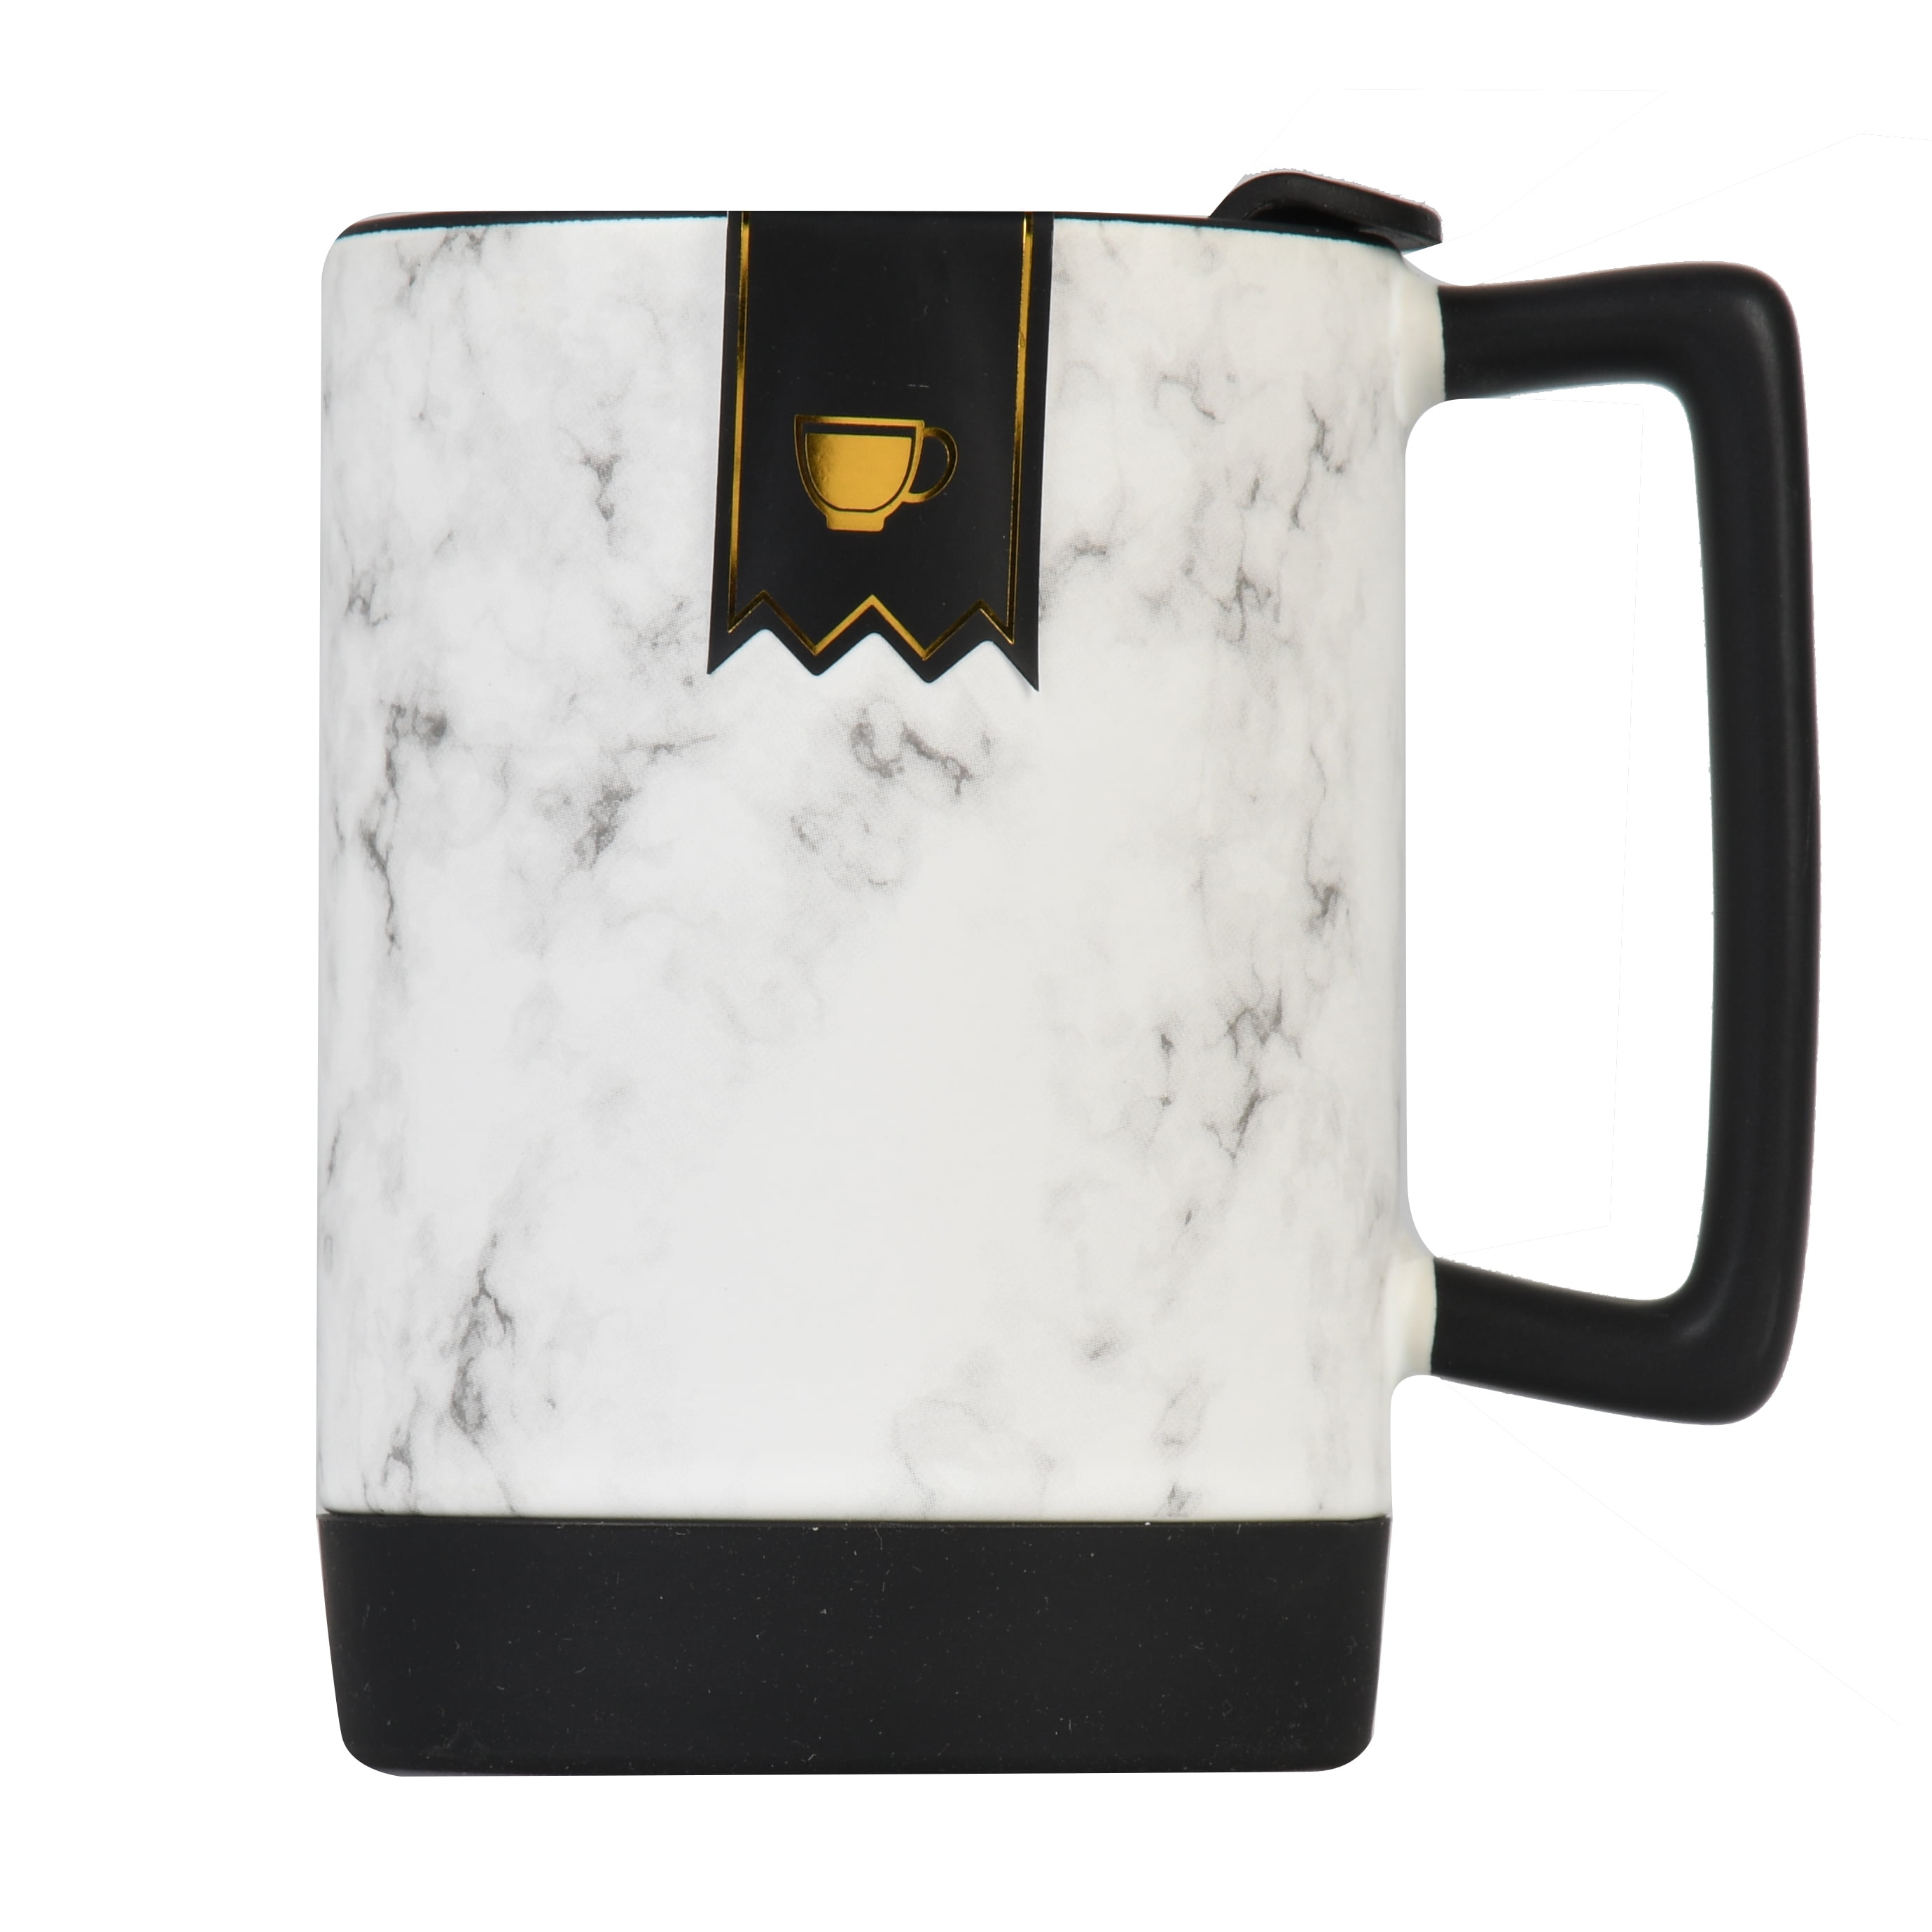 S/m coffee travel mug, unspillable coffee mug, heated coffee mug